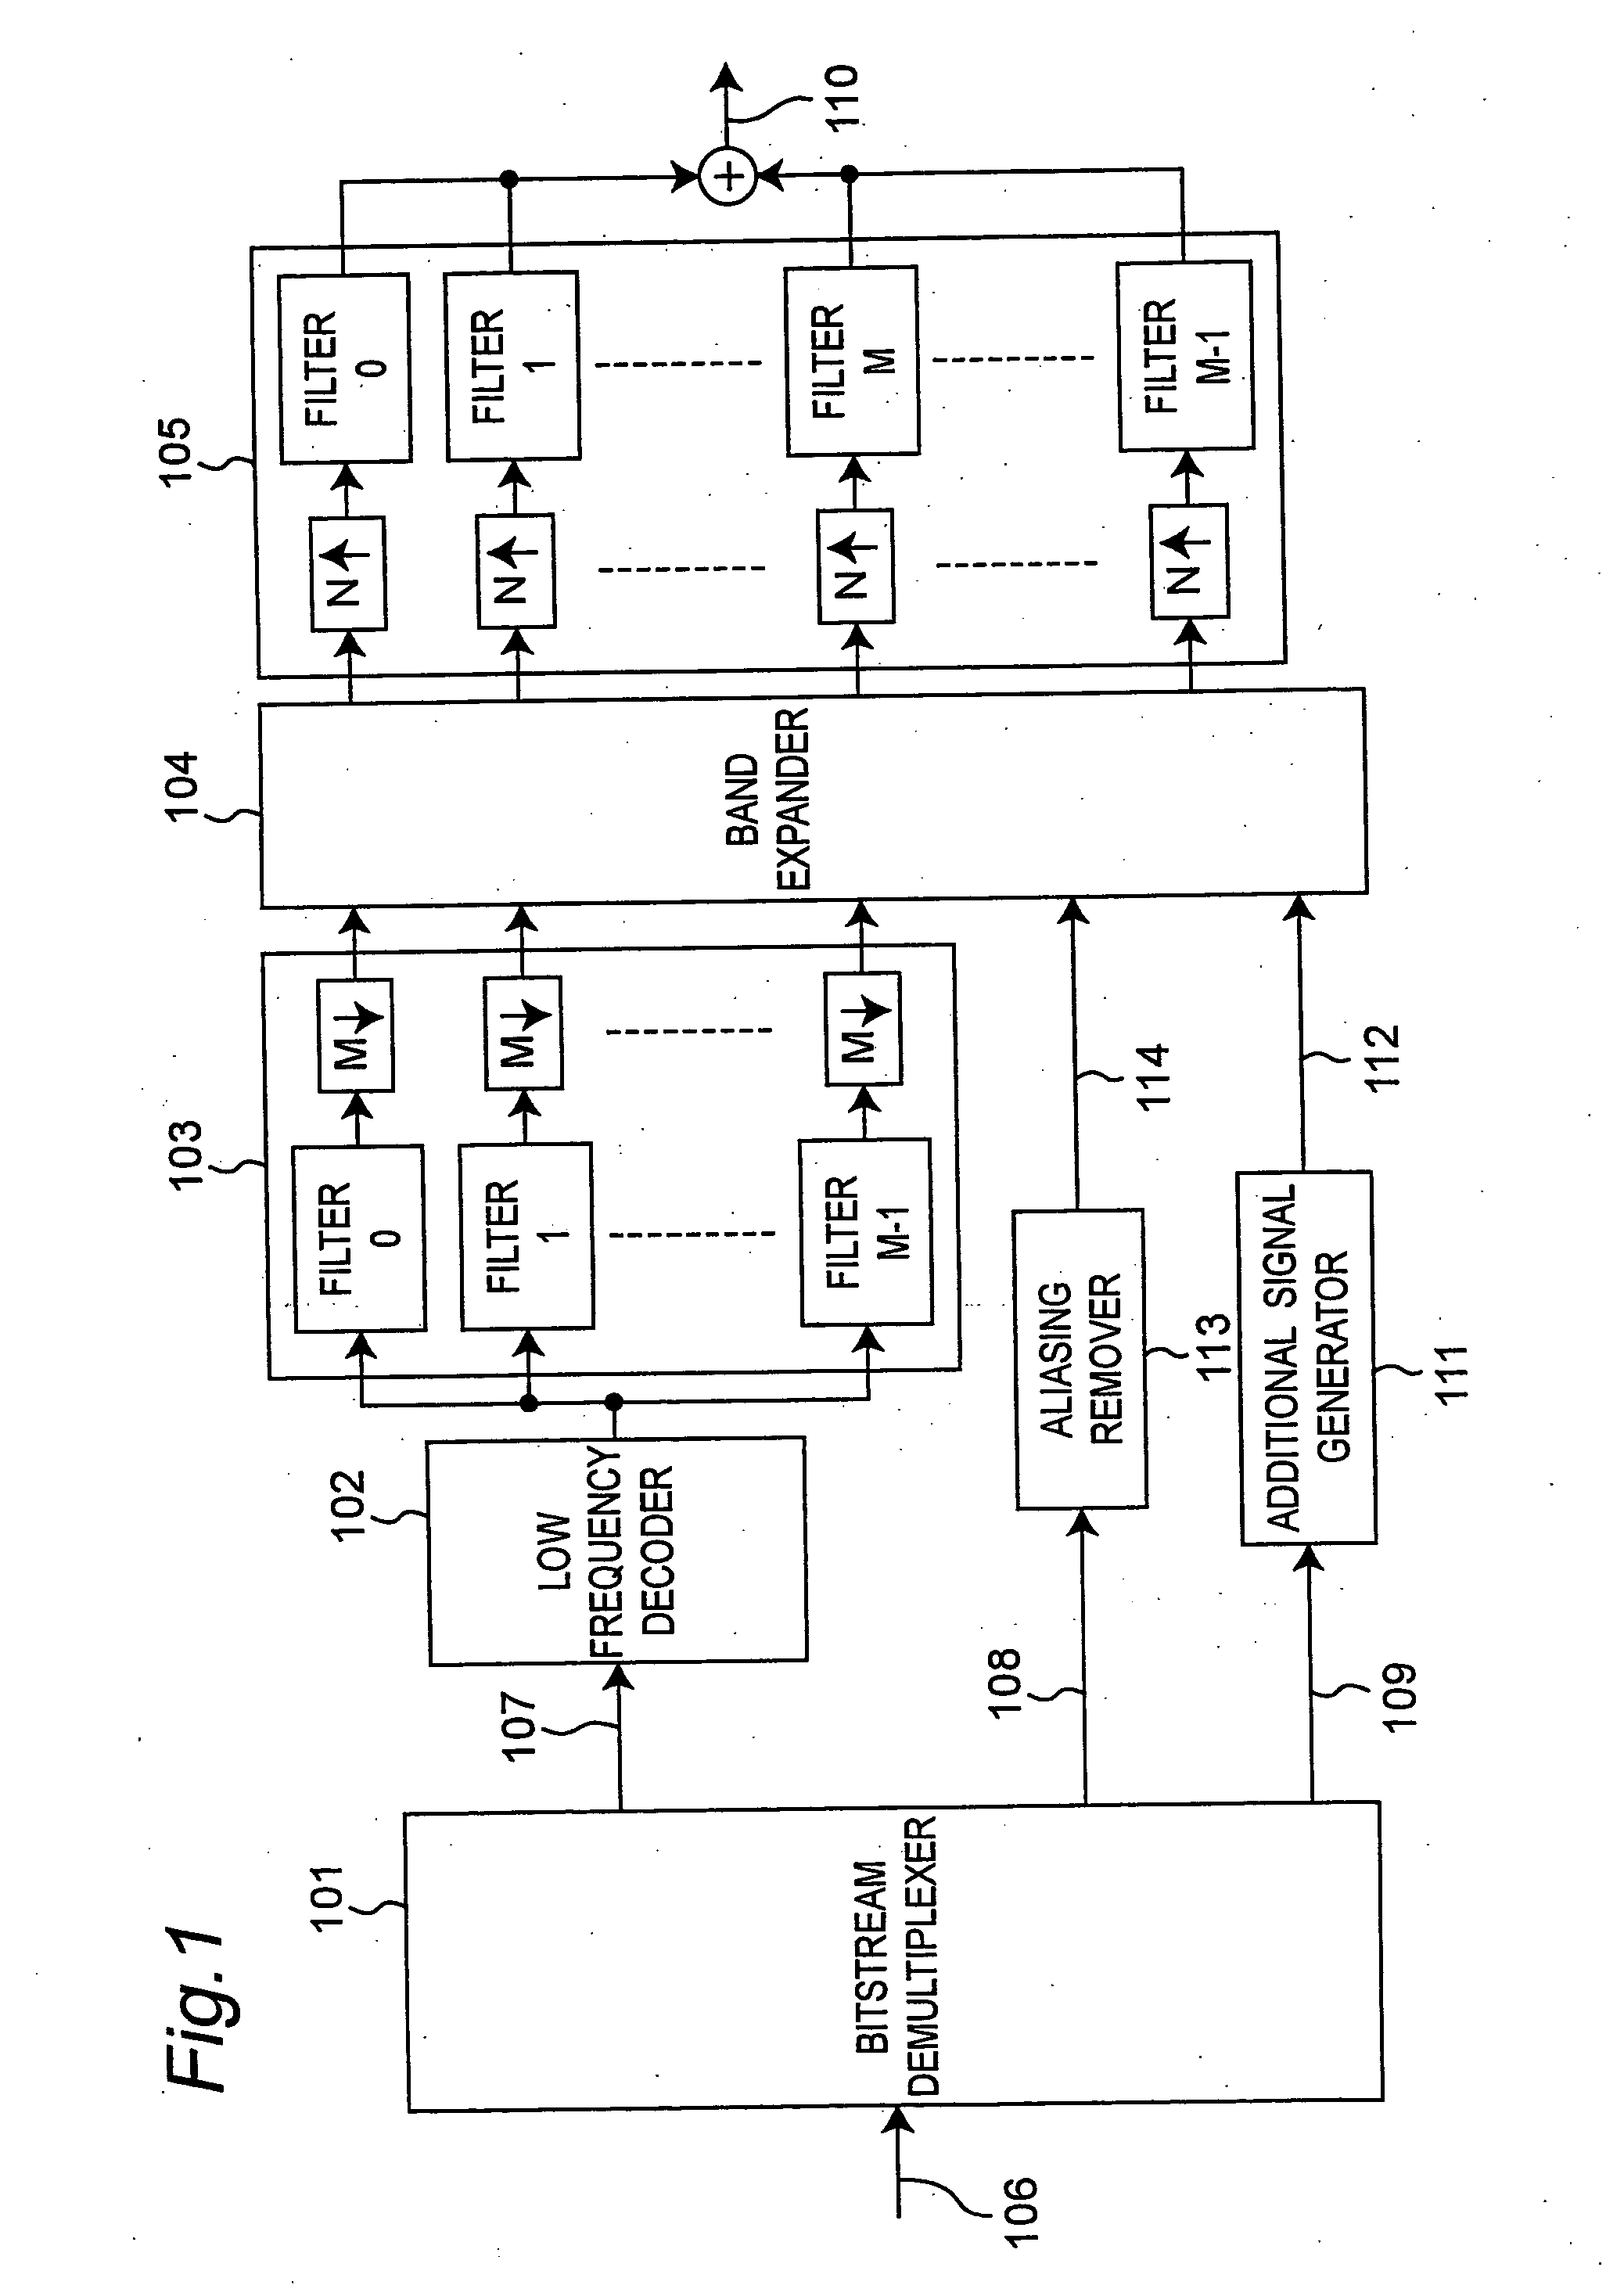 Audio decoding apparatus and method